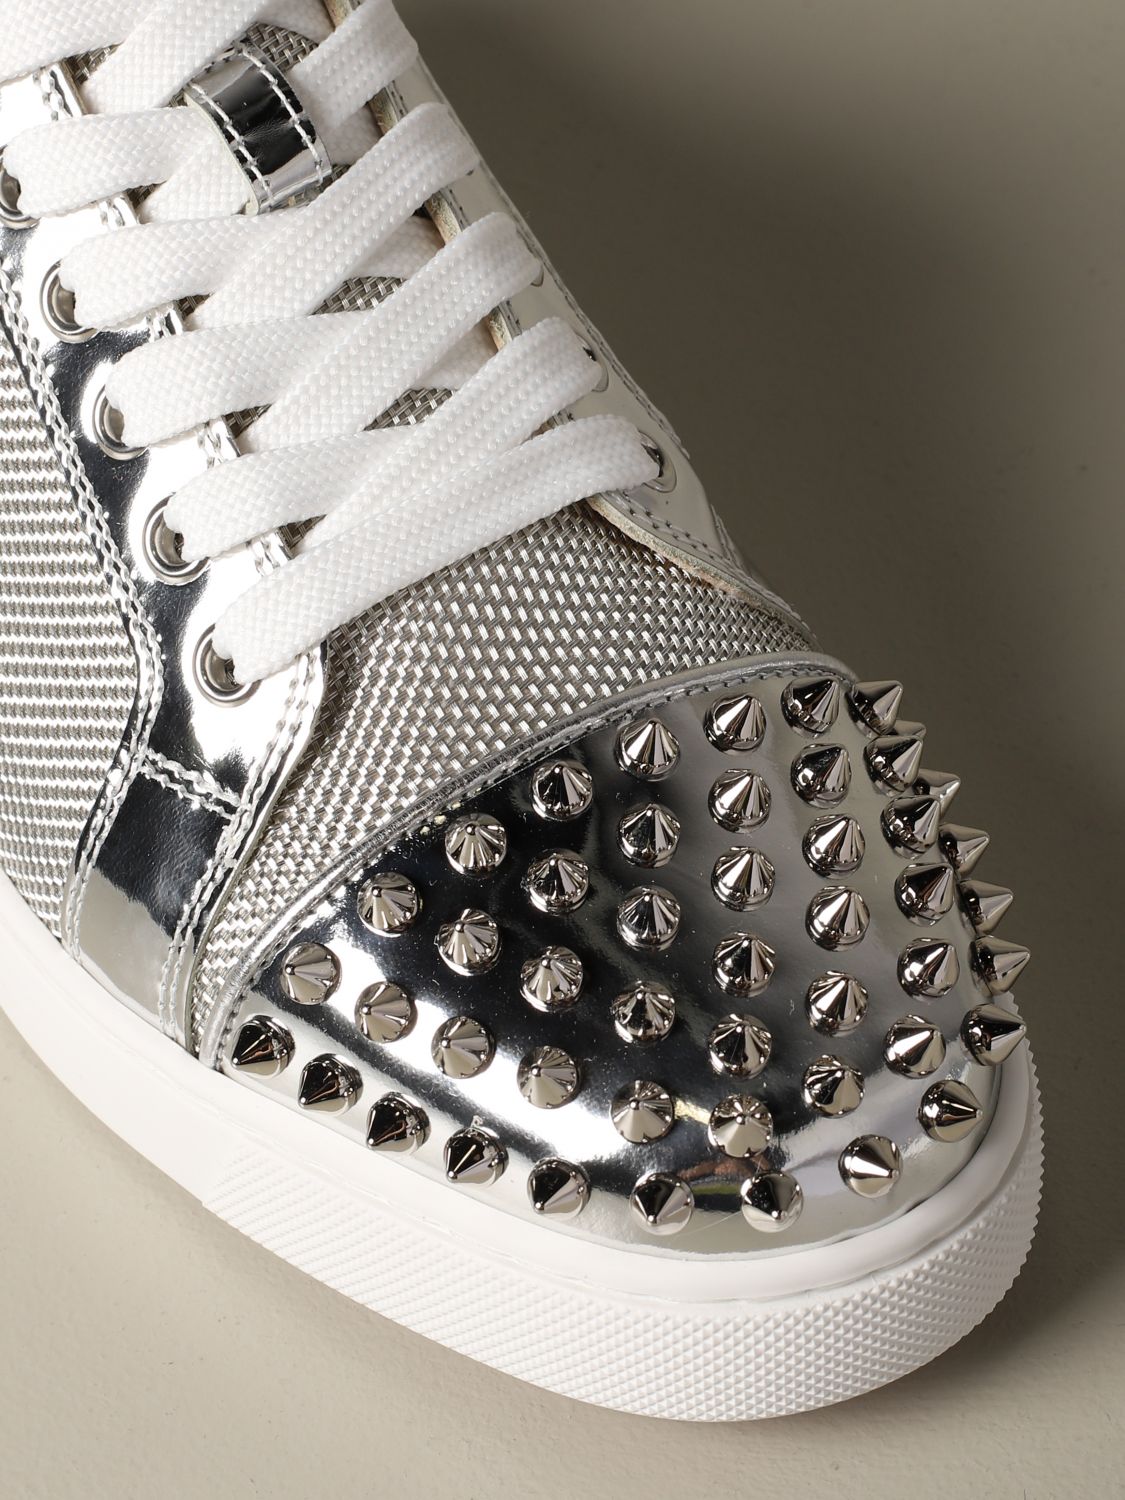 christian louboutin silver sneakers